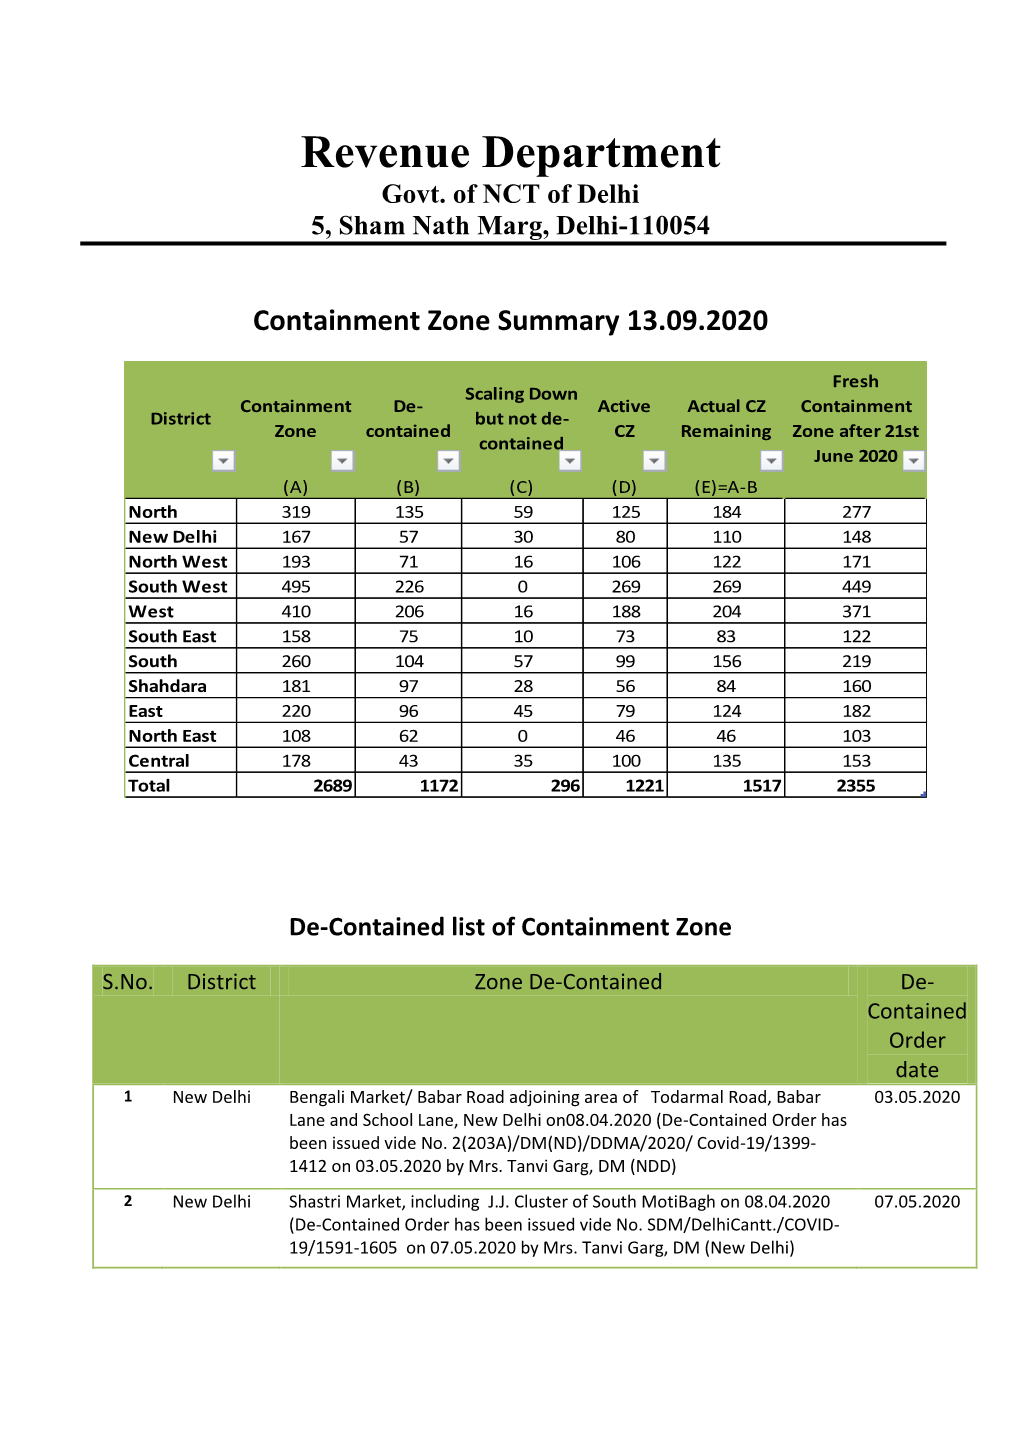 Containment Zone Summary 13.09.2020